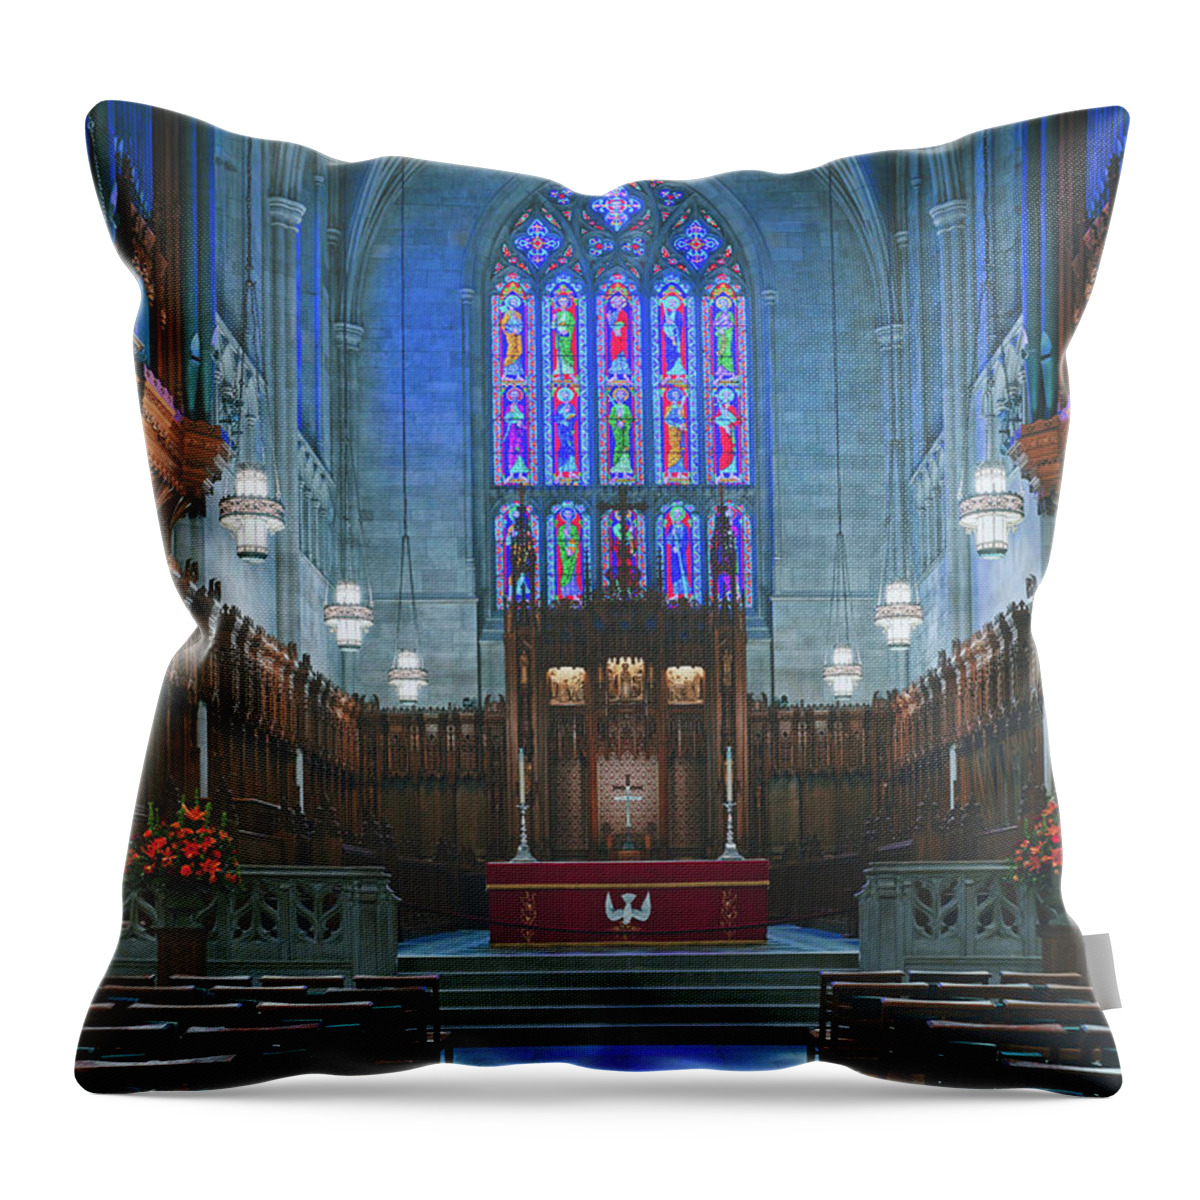 Duke University Throw Pillow featuring the photograph Duke University Chapel Sanctuary #1 by Mountain Dreams